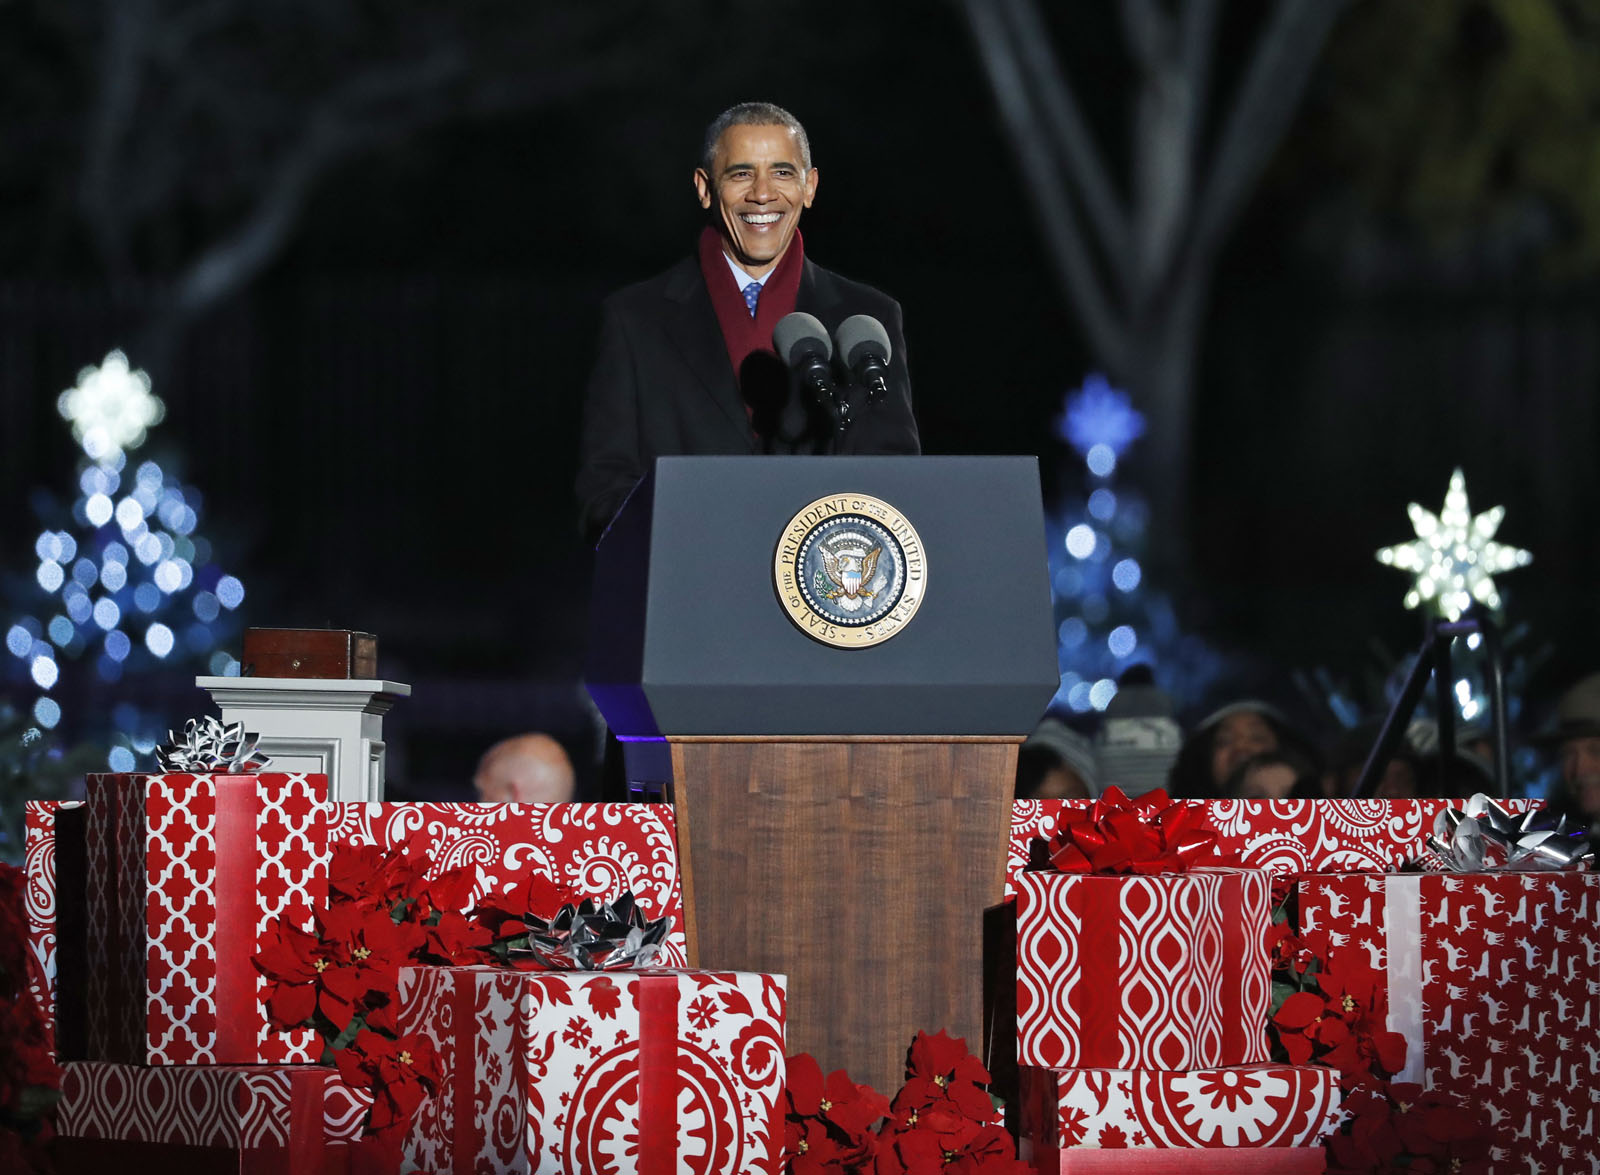 President Barack Obama speaks during the lighting ceremony for the 2016 National Christmas Tree on the Ellipse near the White House, Thursday, Dec. 1, 2016 in Washington. (AP Photo/Alex Brandon)